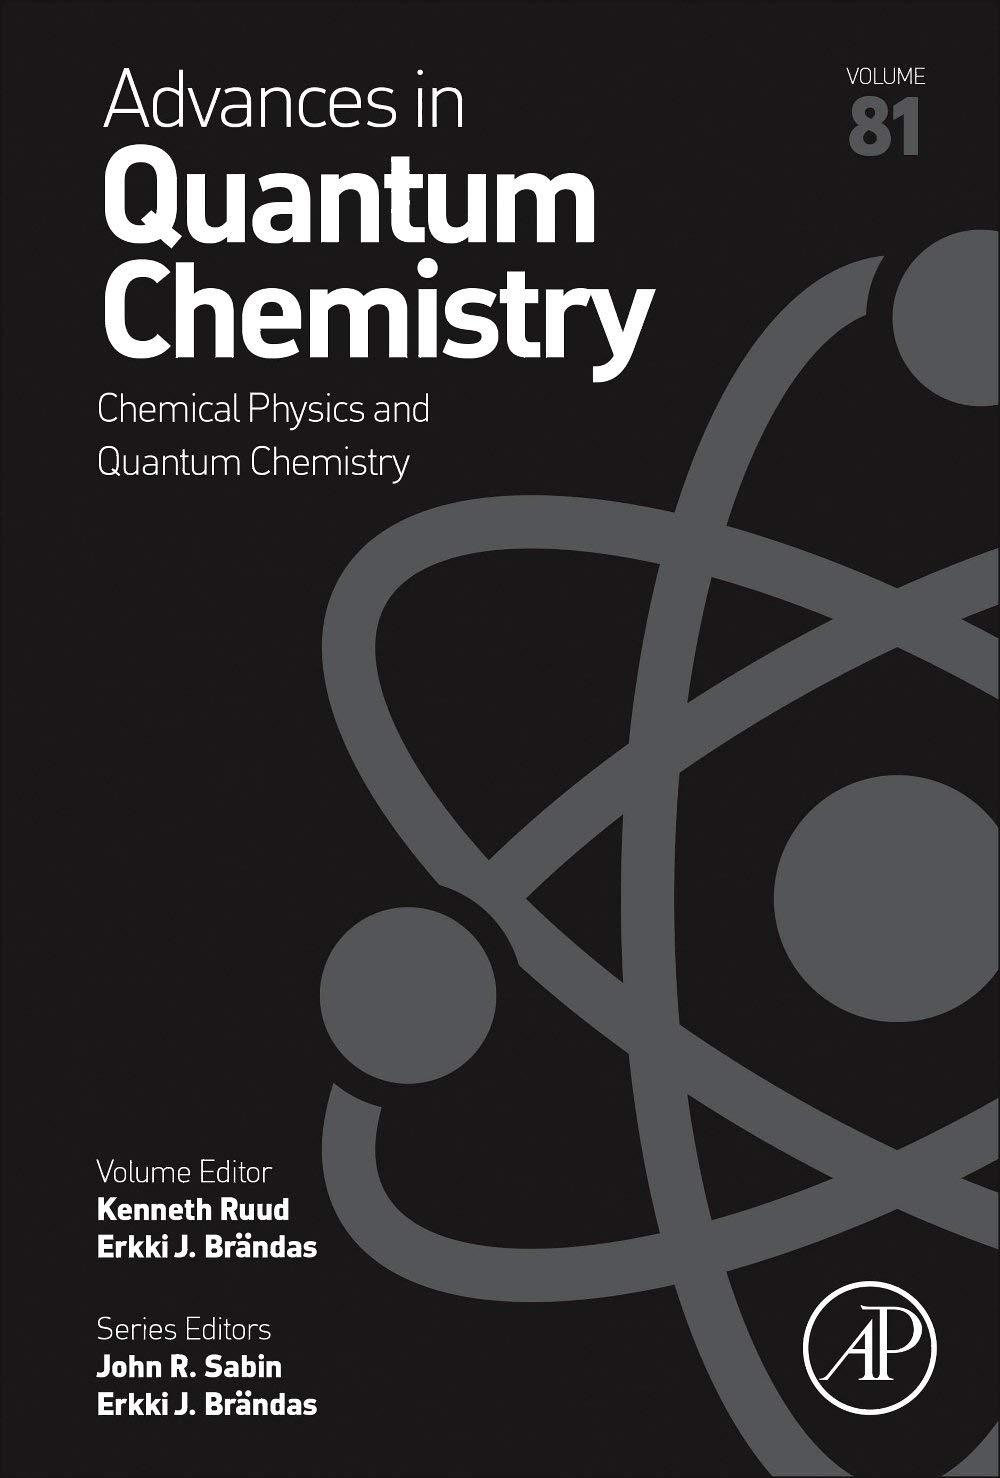 chemical physics and quantum chemistry advances in quantum chemistry volume 81 1st edition erkki j. brändas,